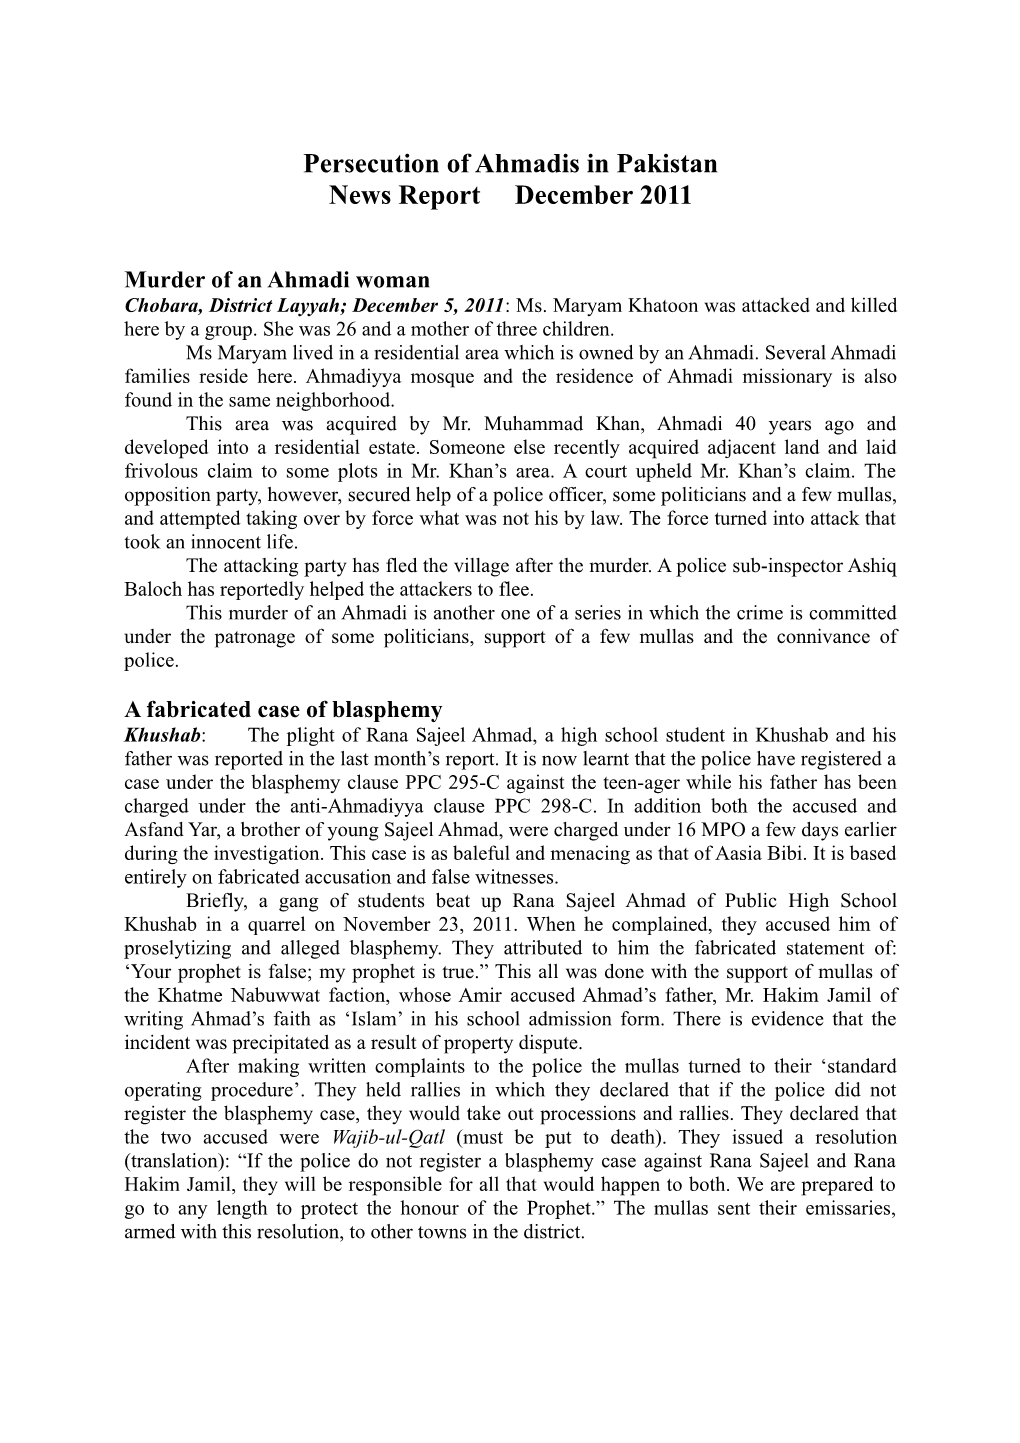 Persecution of Ahmadis in Pakistan News Report December 2011